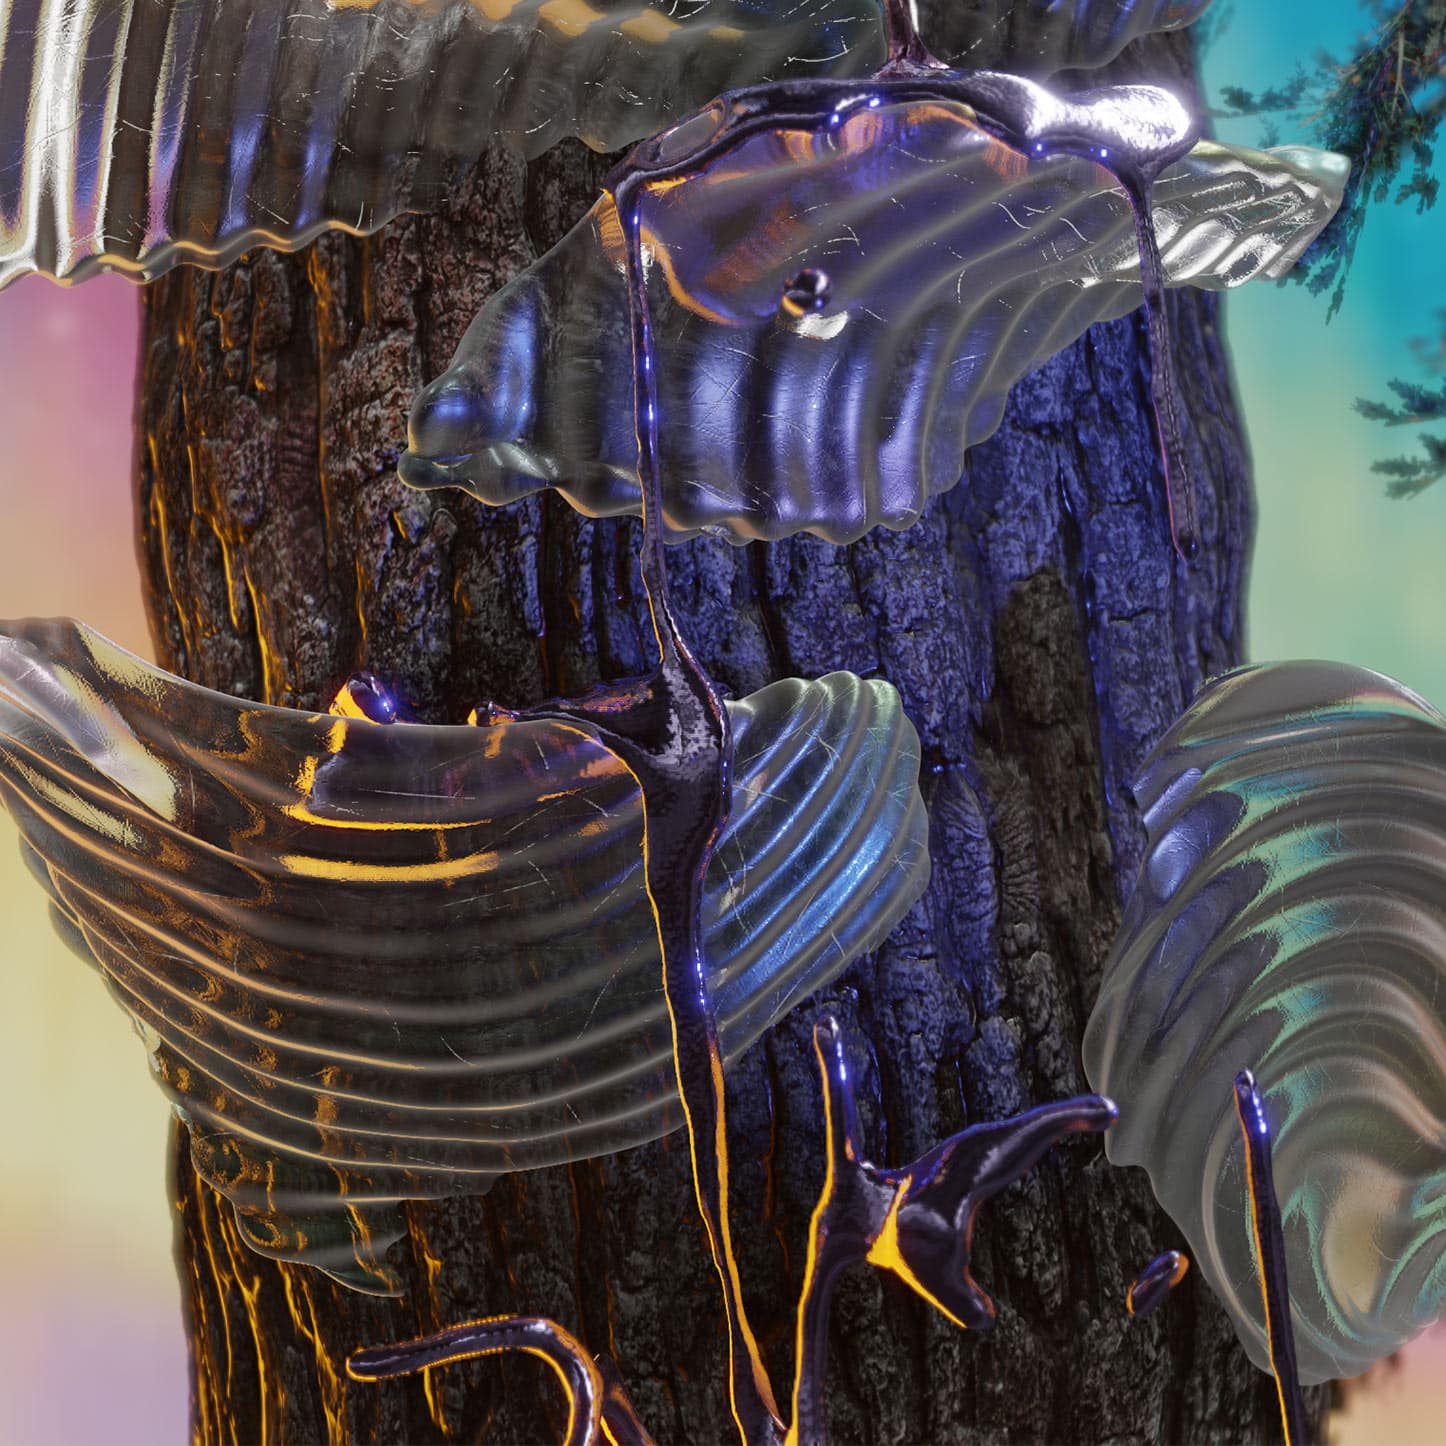 Close-up CGI image of glass mushrooms on tree trunk